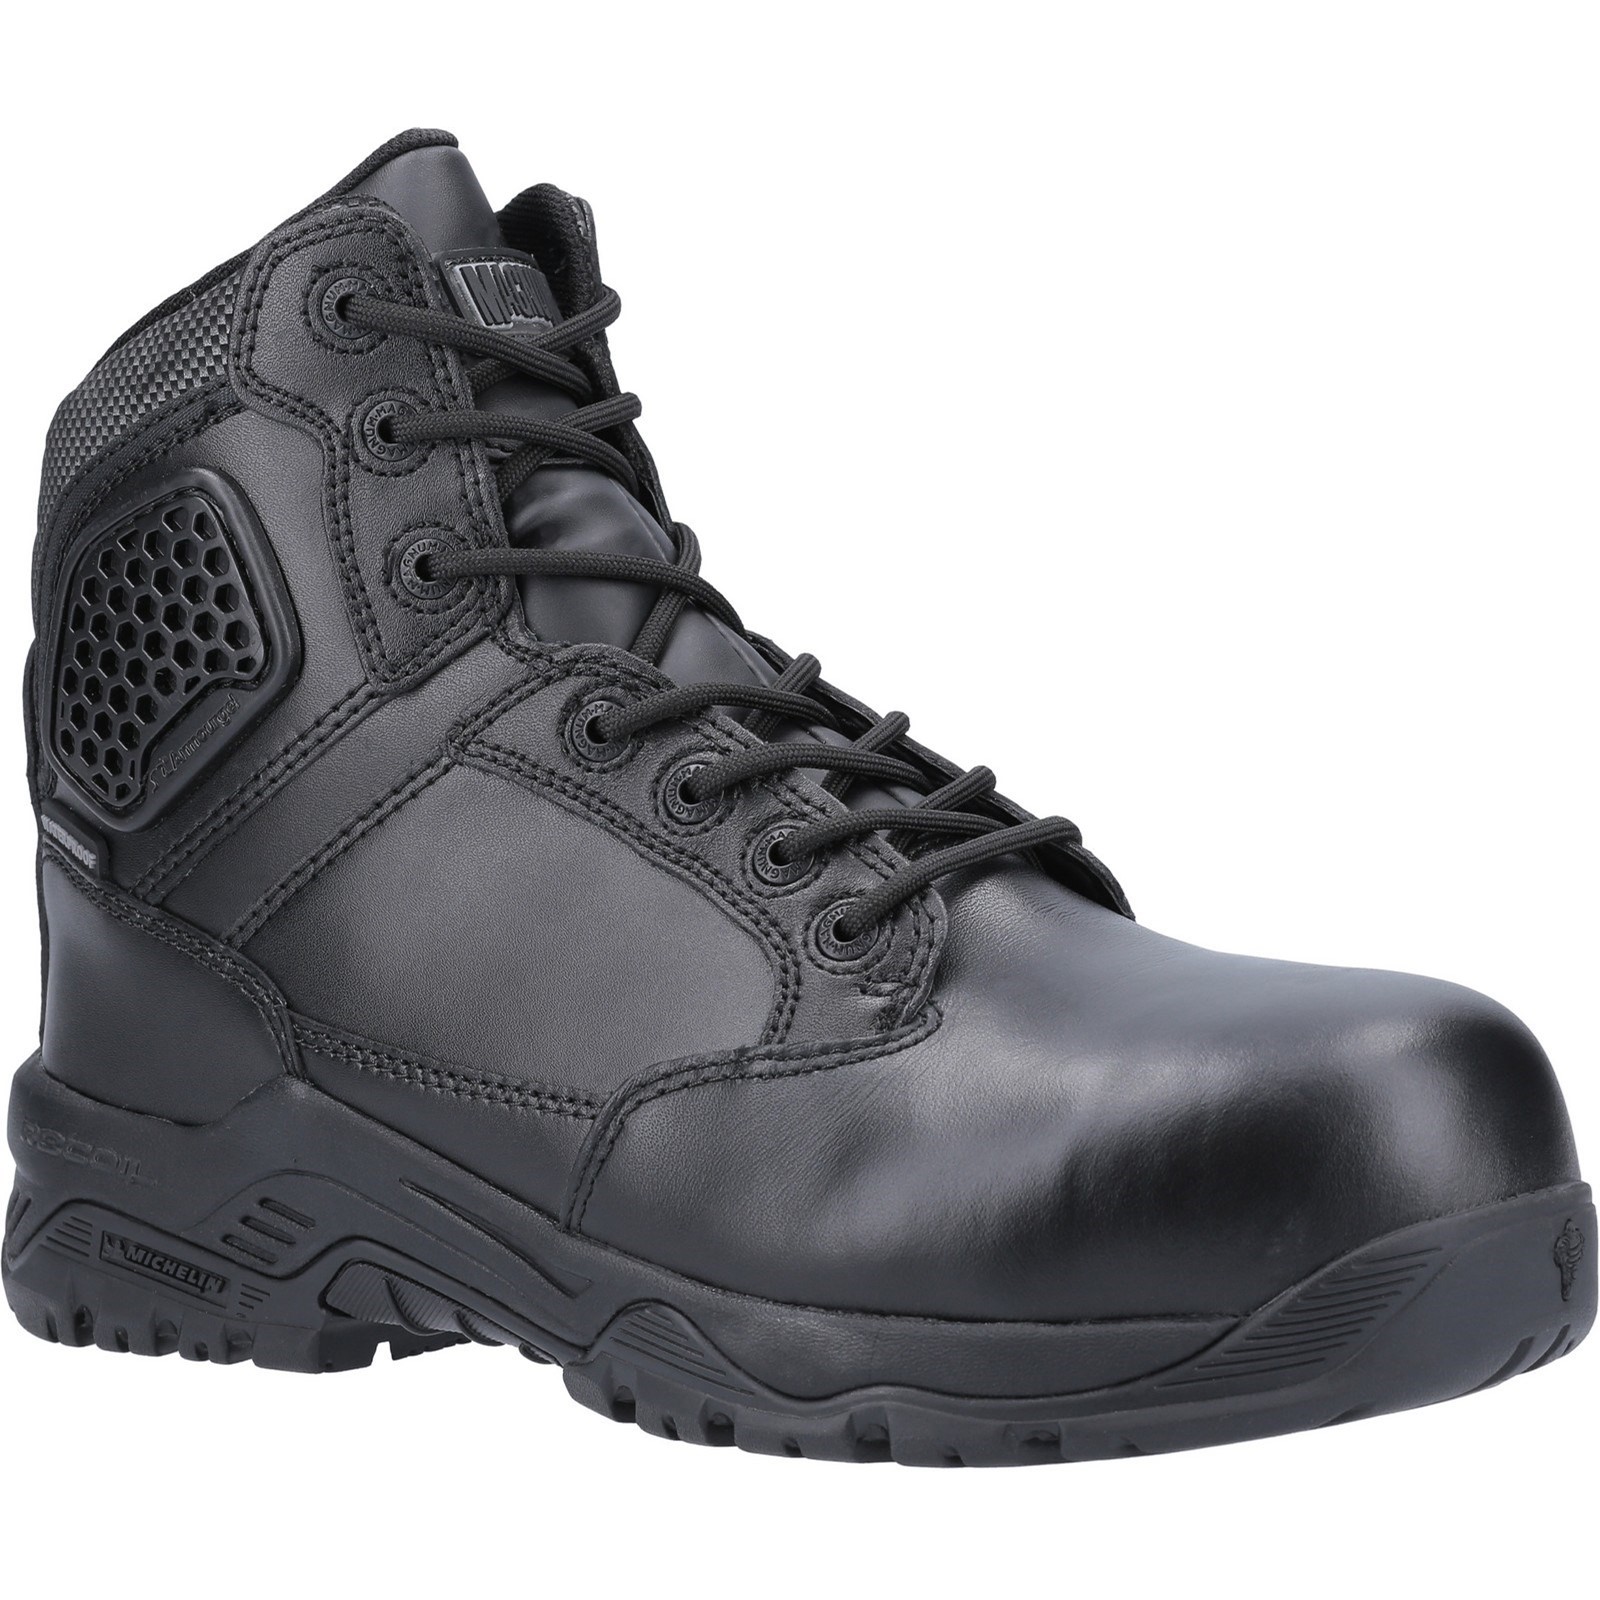 Strike Force 6.0 Uniform Safety Boots